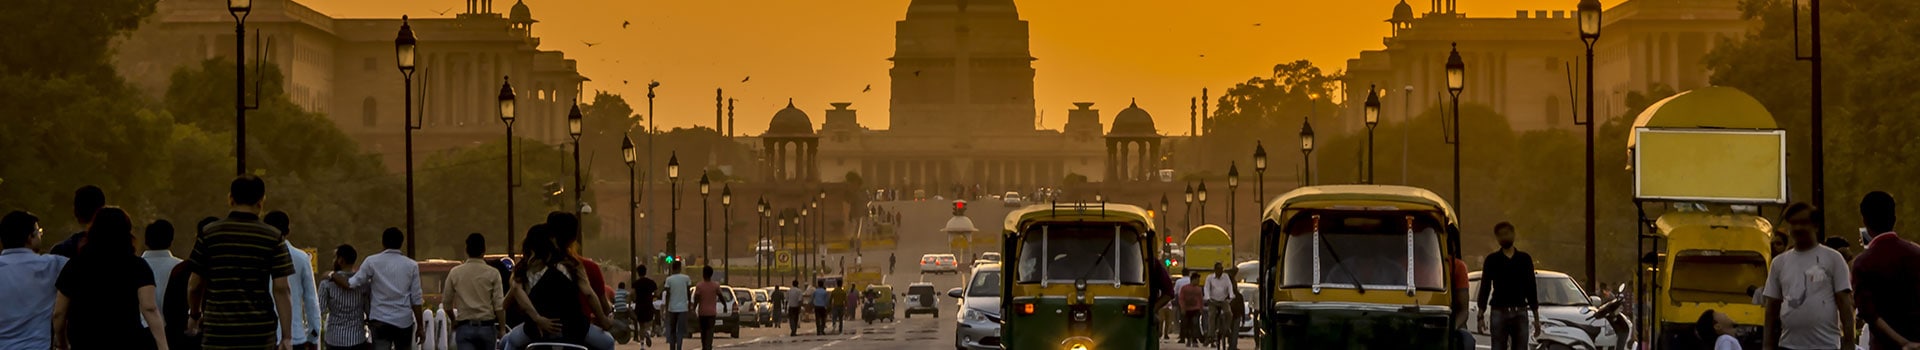 Hindustan - Delhi